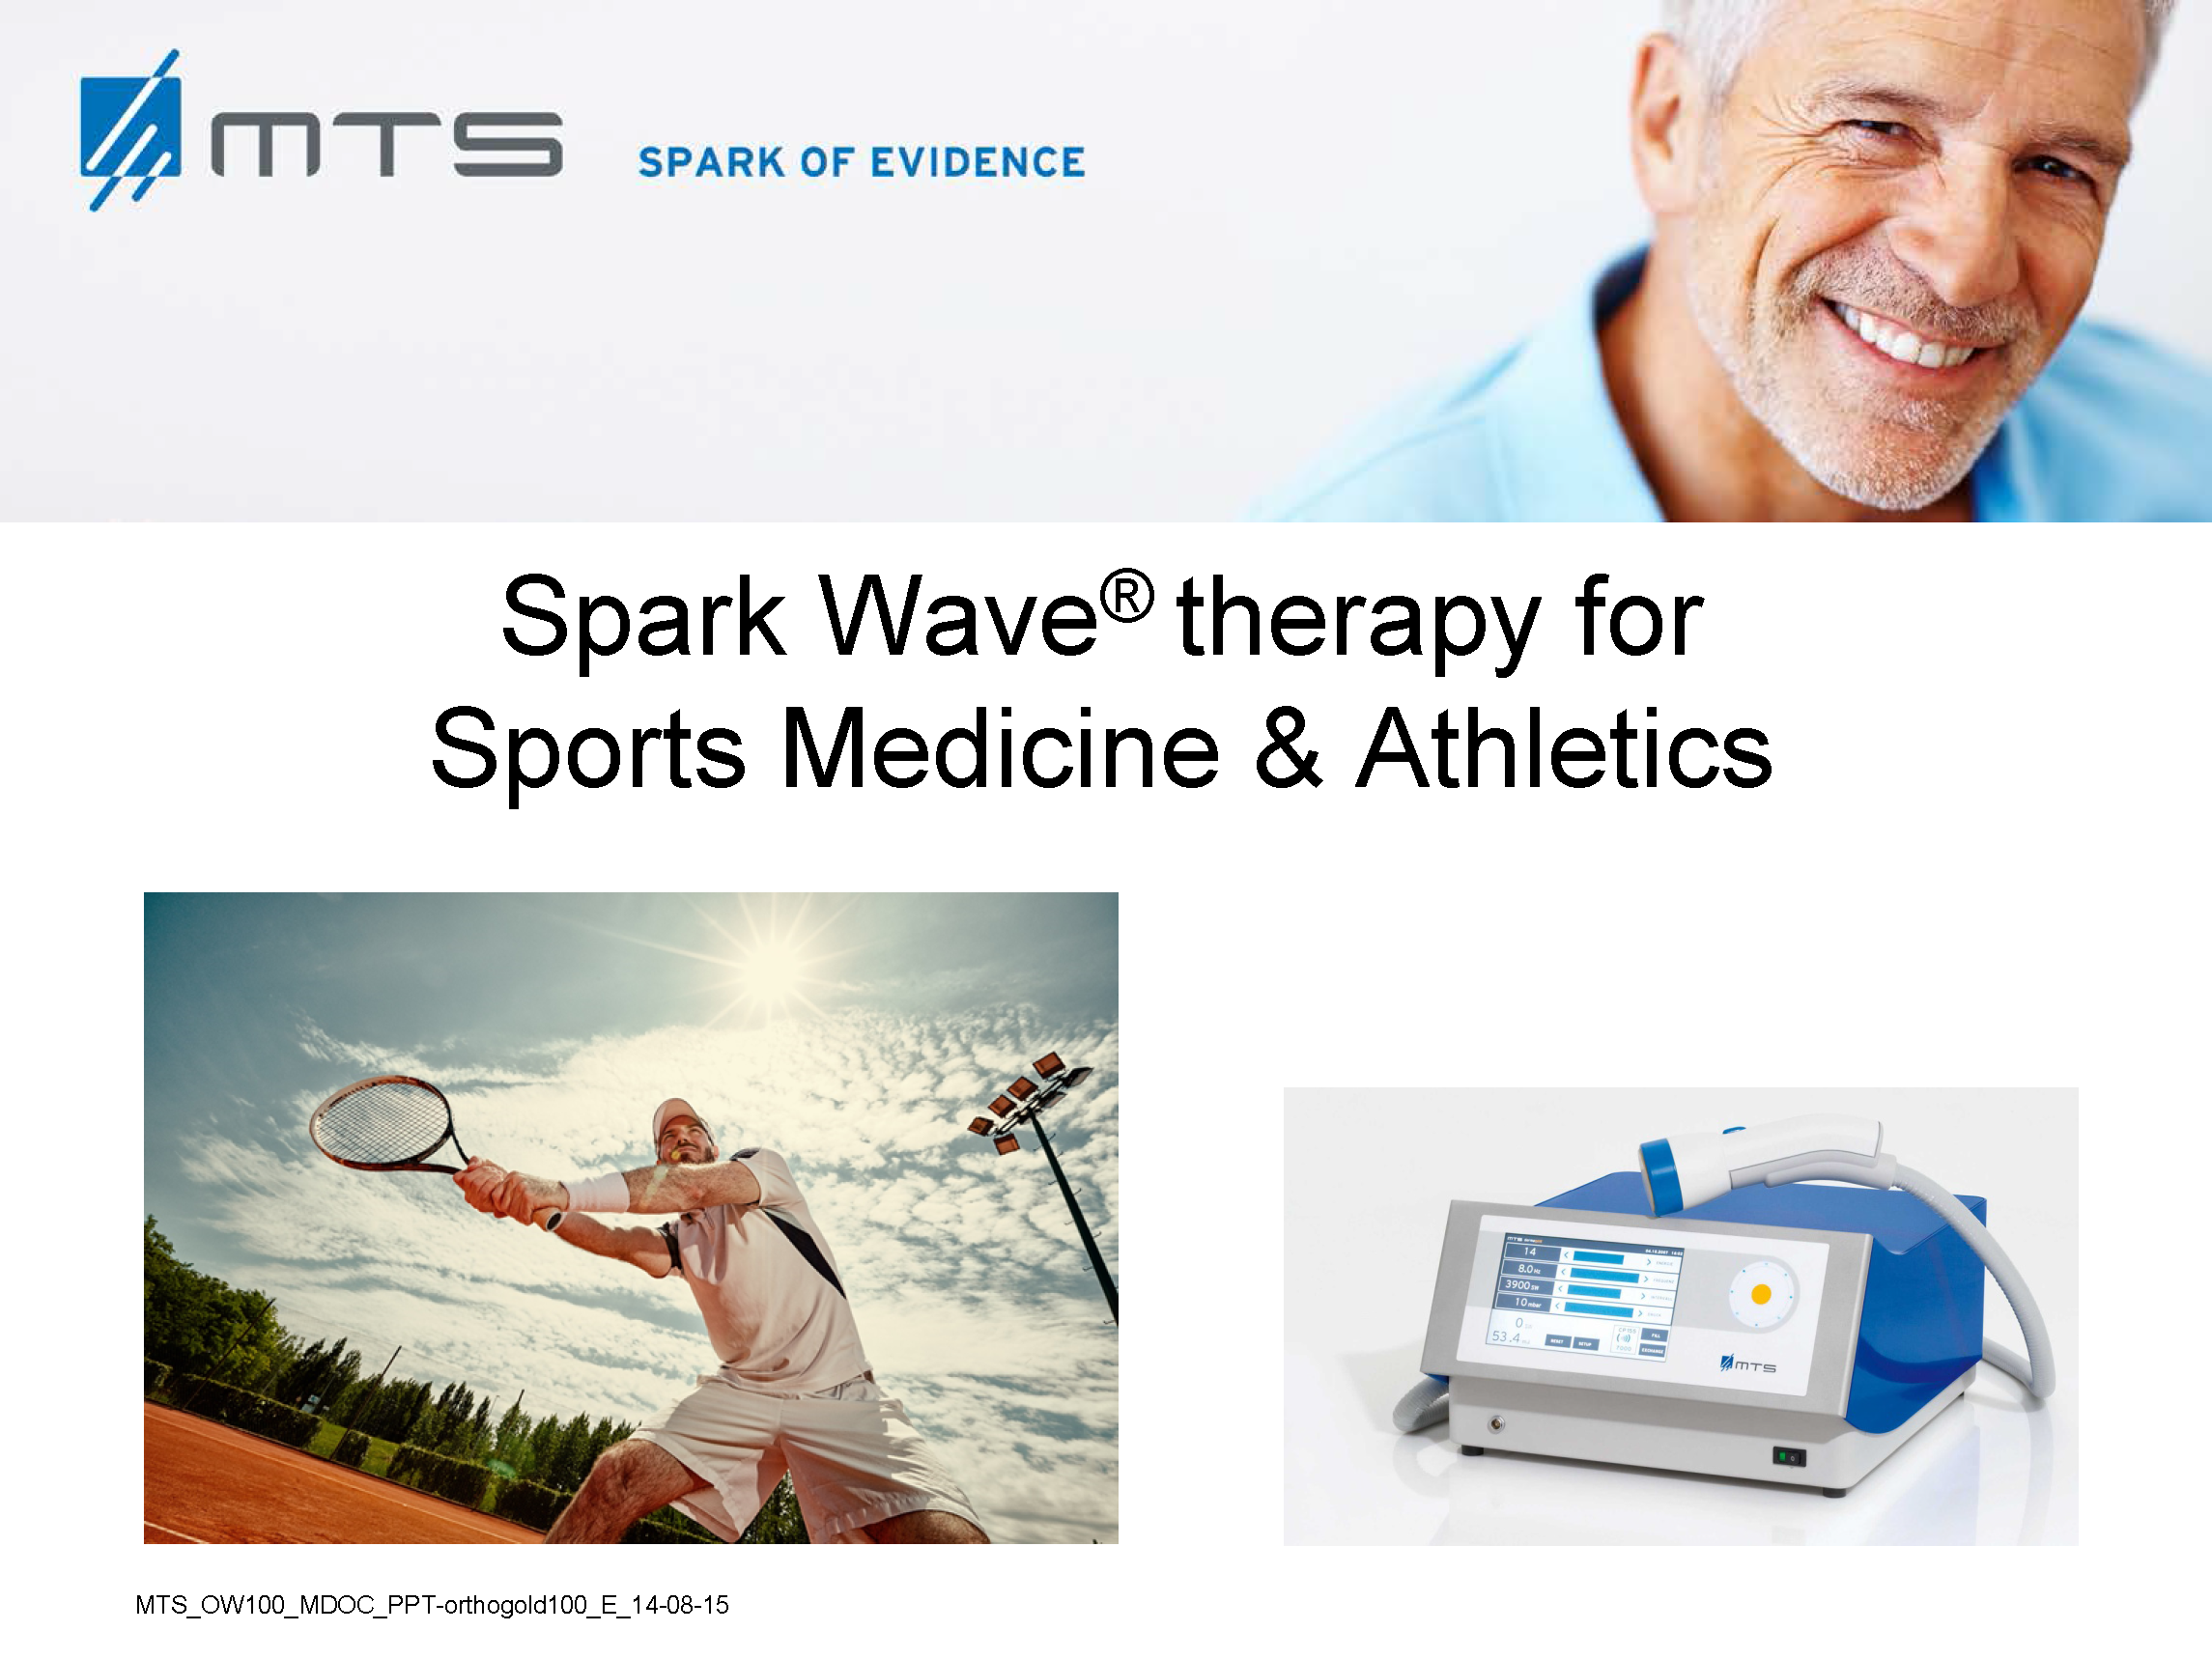 MTS Medical – Innovative Shock Wave Technology